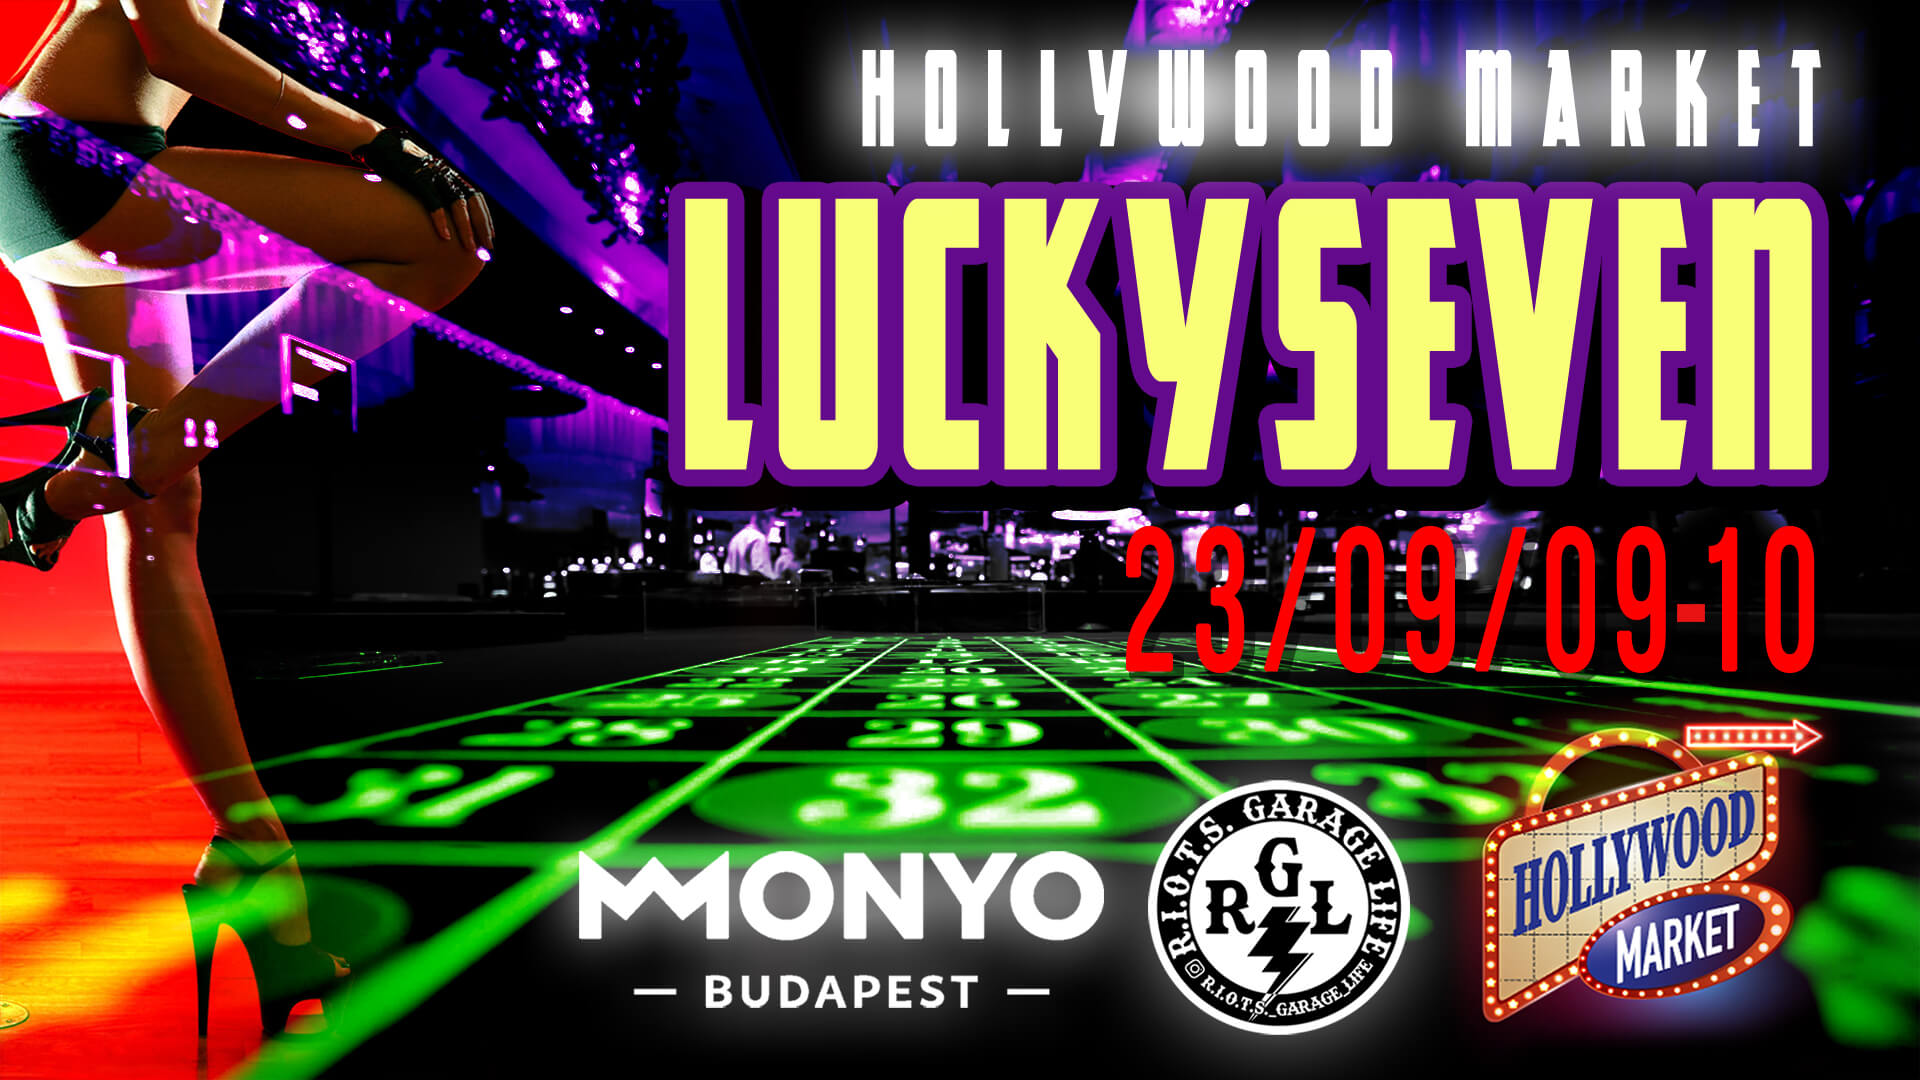 7. Hollywood Market Lucky Seven